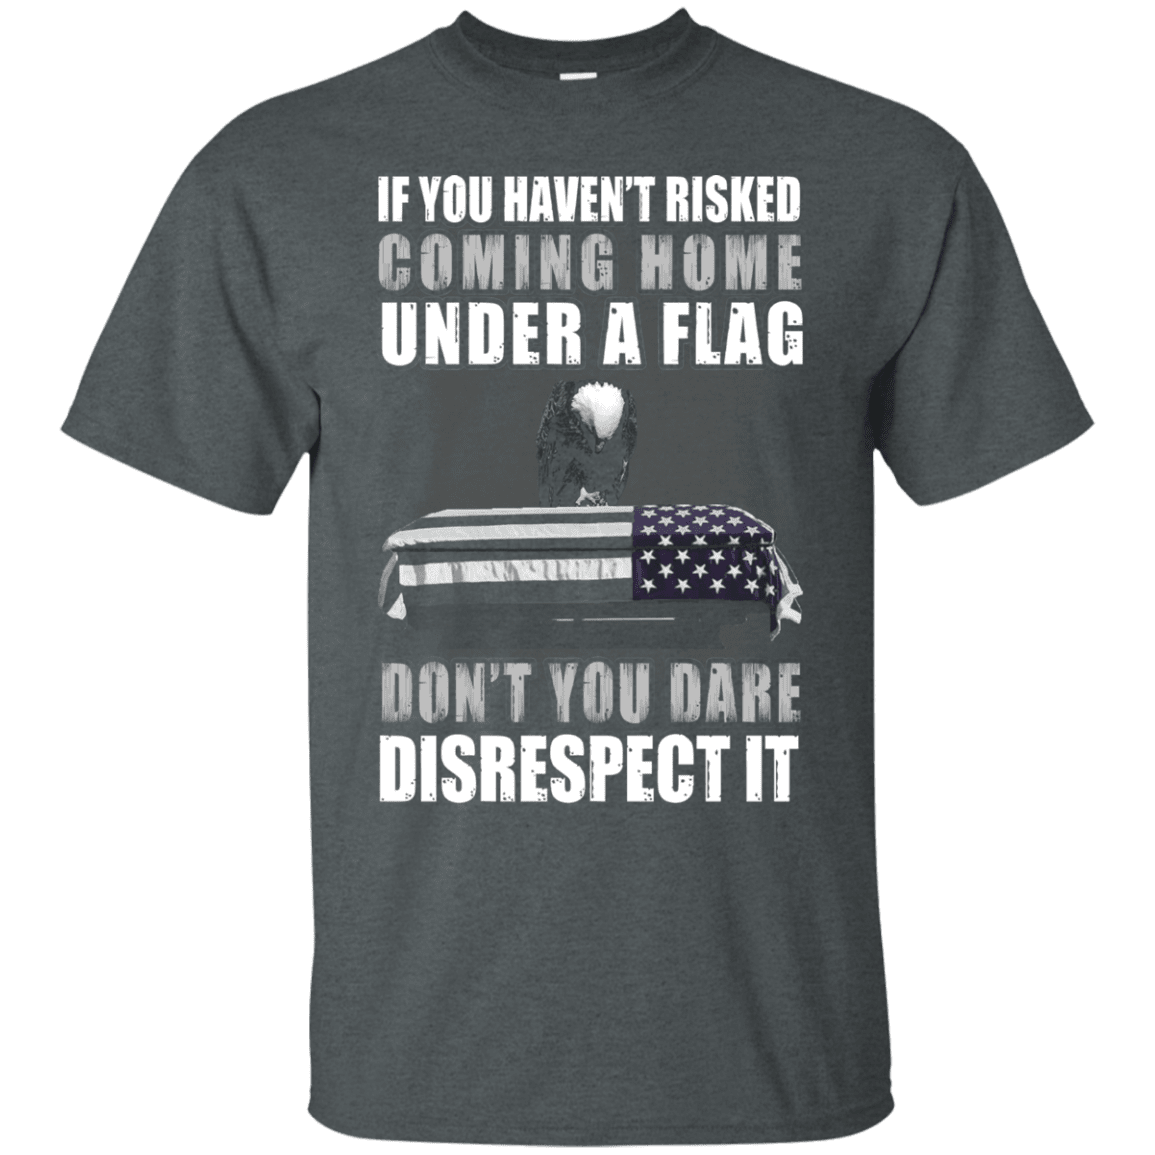 Military T-Shirt "Under A Flag Disrespect It Men" Front-TShirt-General-Veterans Nation